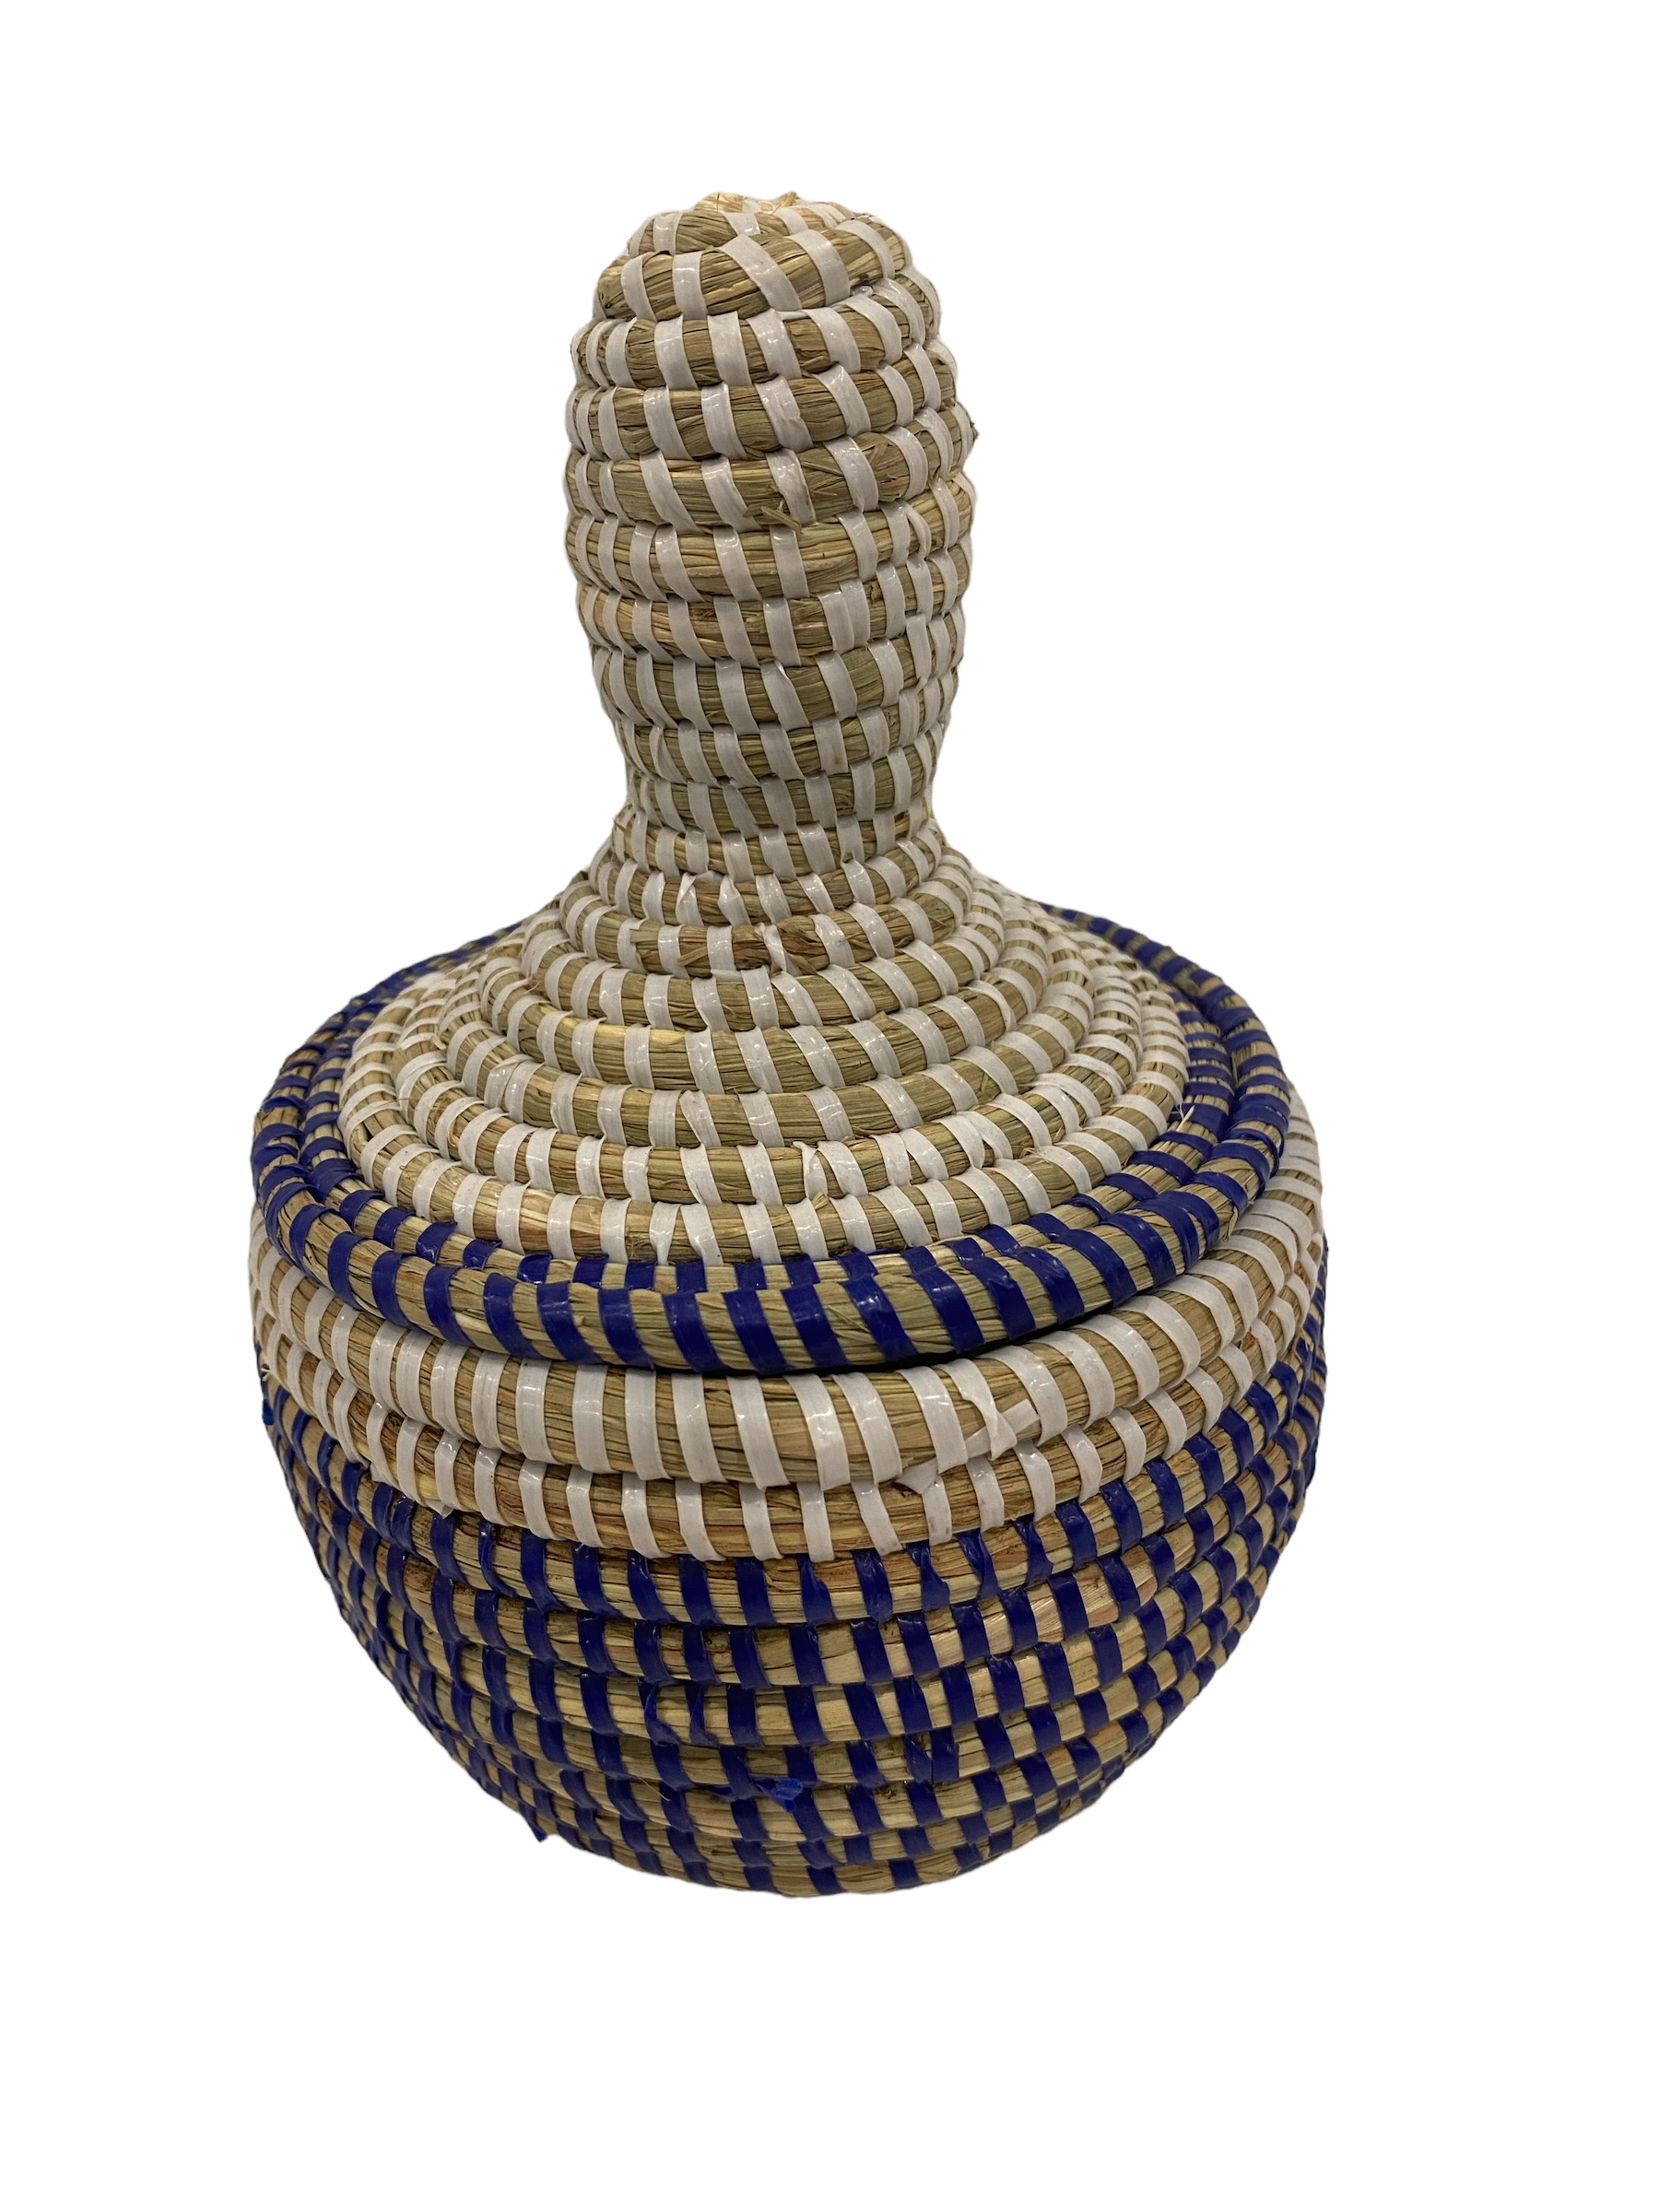 Senegal Basket Small - (5804)